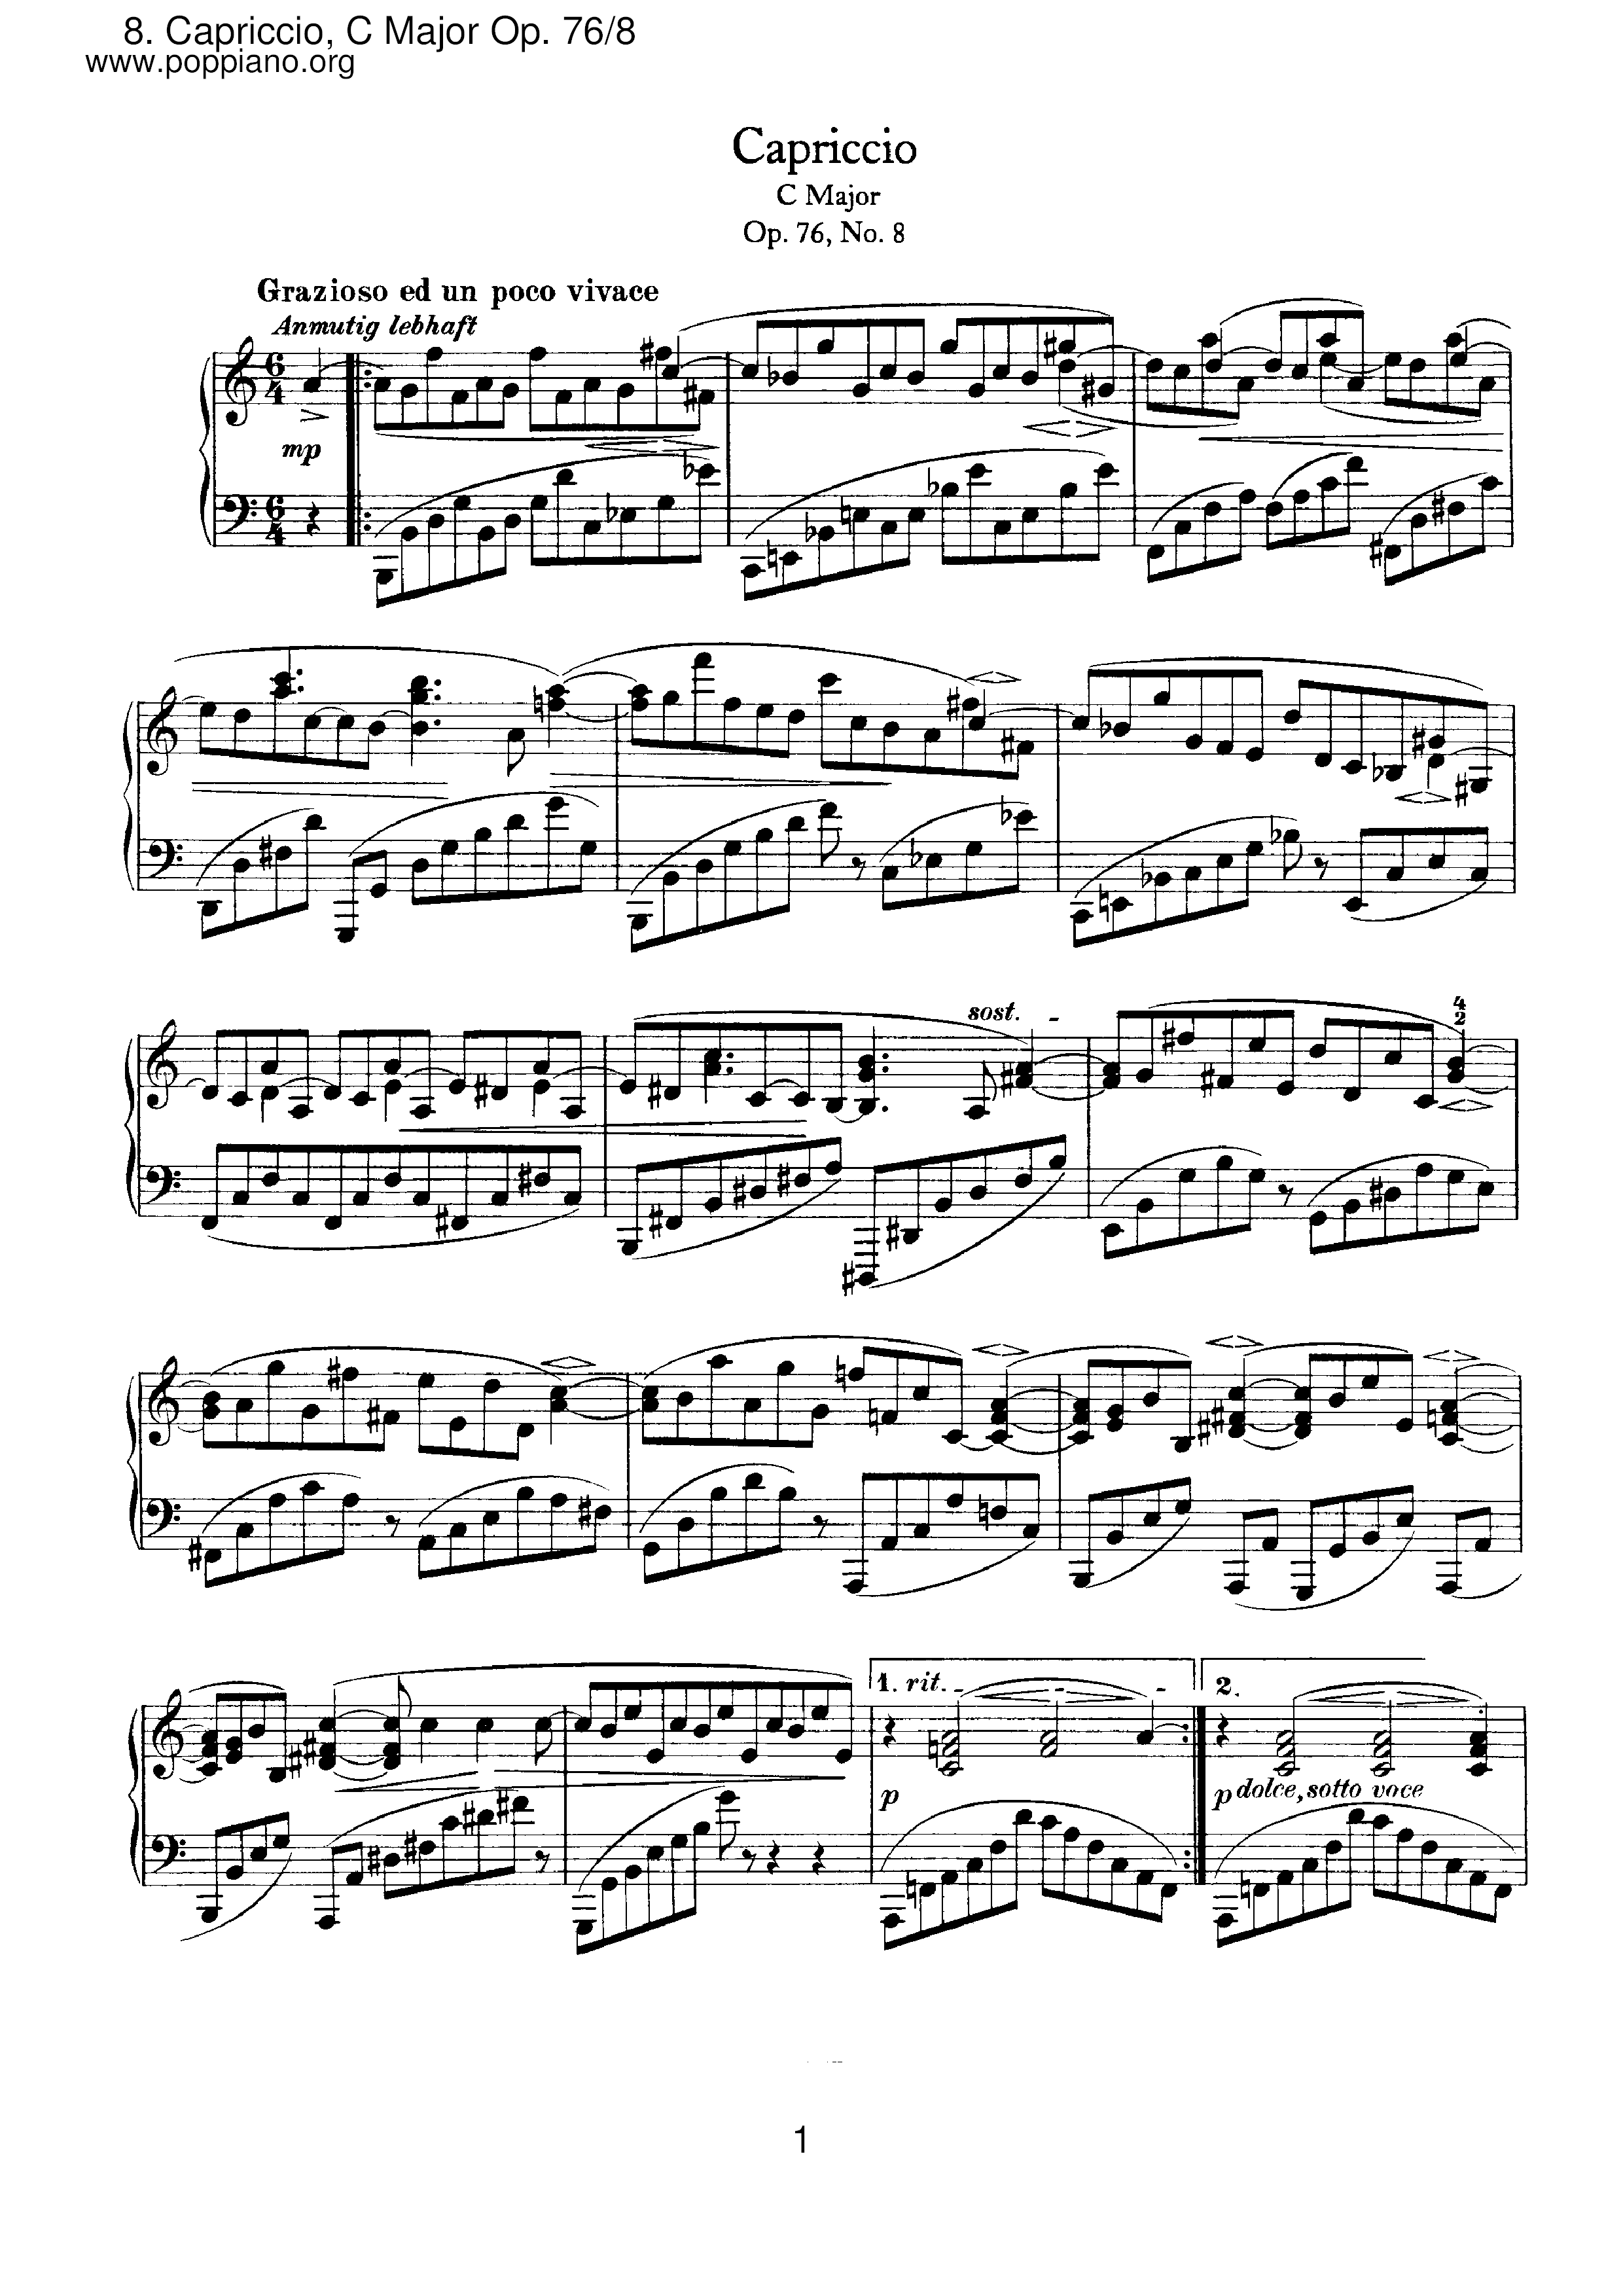 No.8 Capriccio, C Major Score